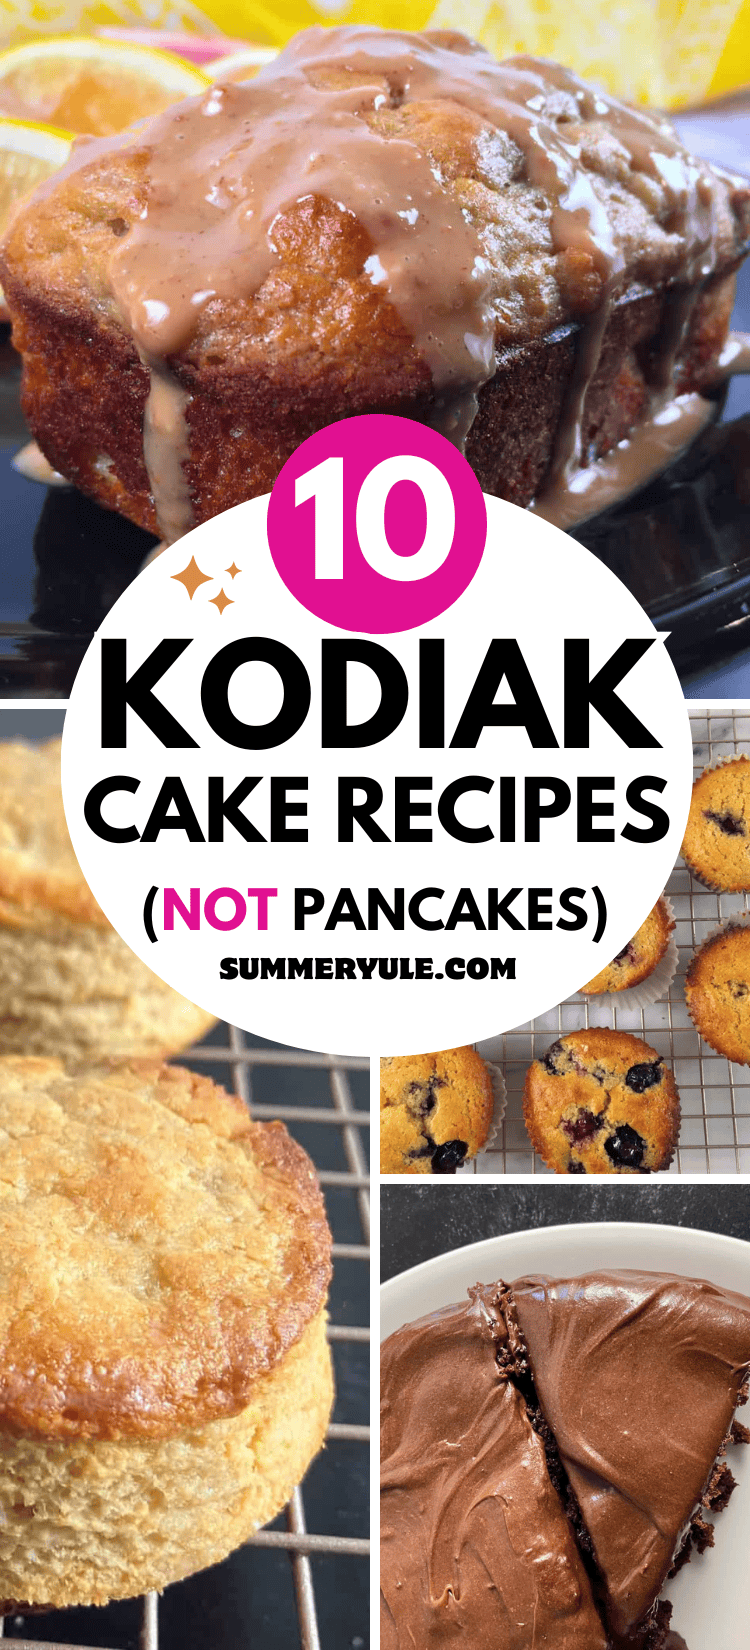 Kodiak Cakes Recipes